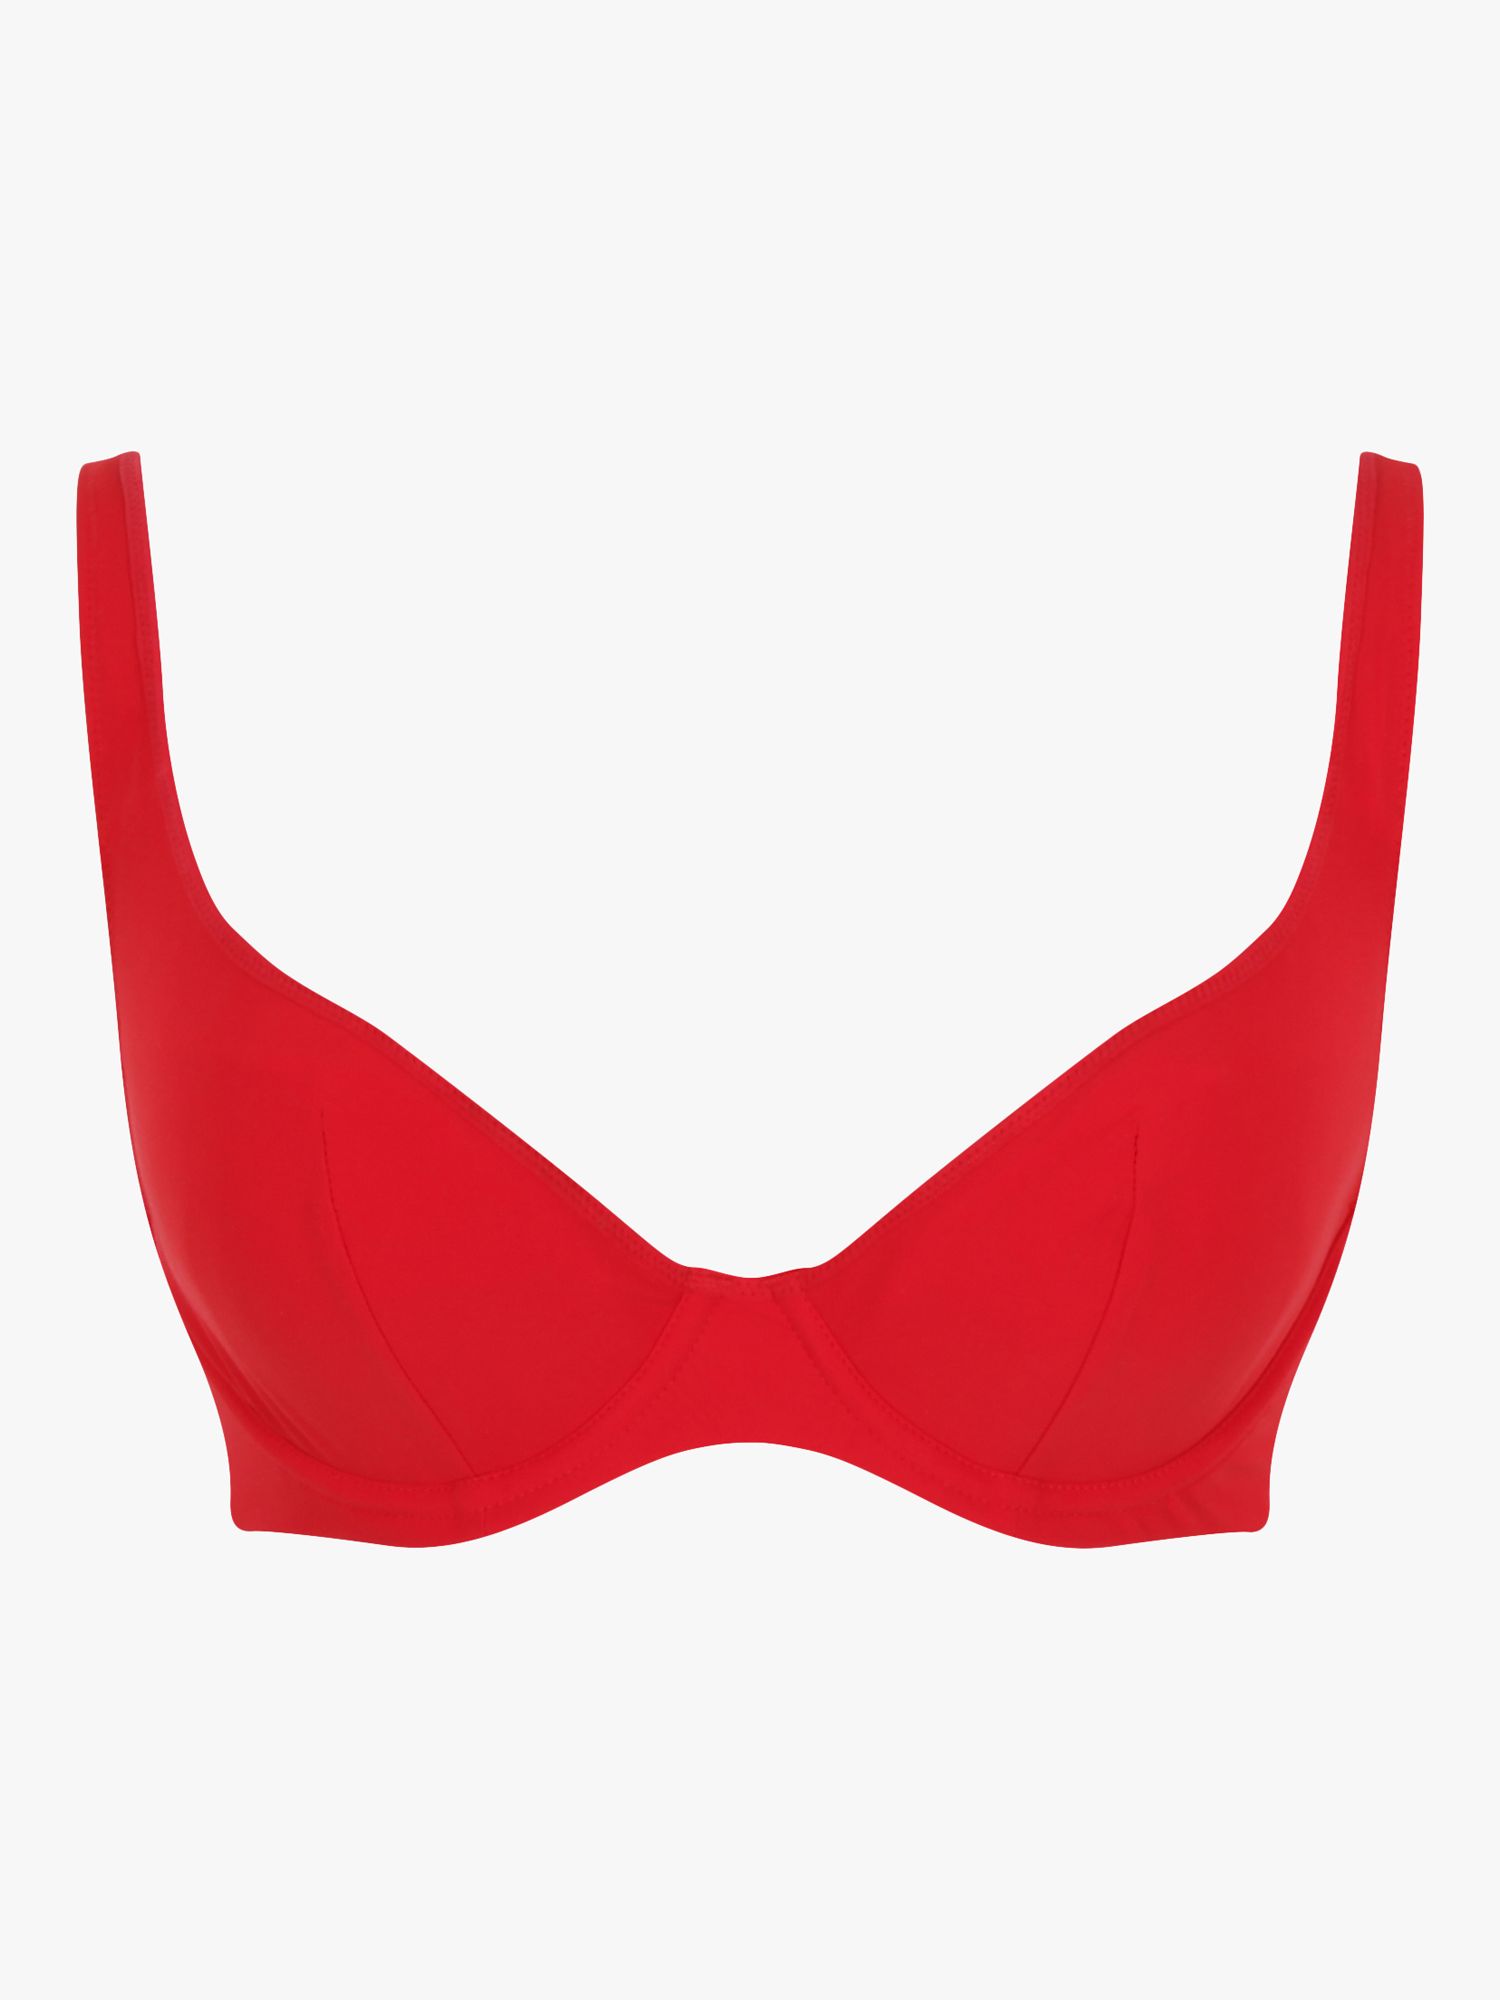 Panache Swim Billie Wired Triangle Bikini Top, Rossa Red, 28DD